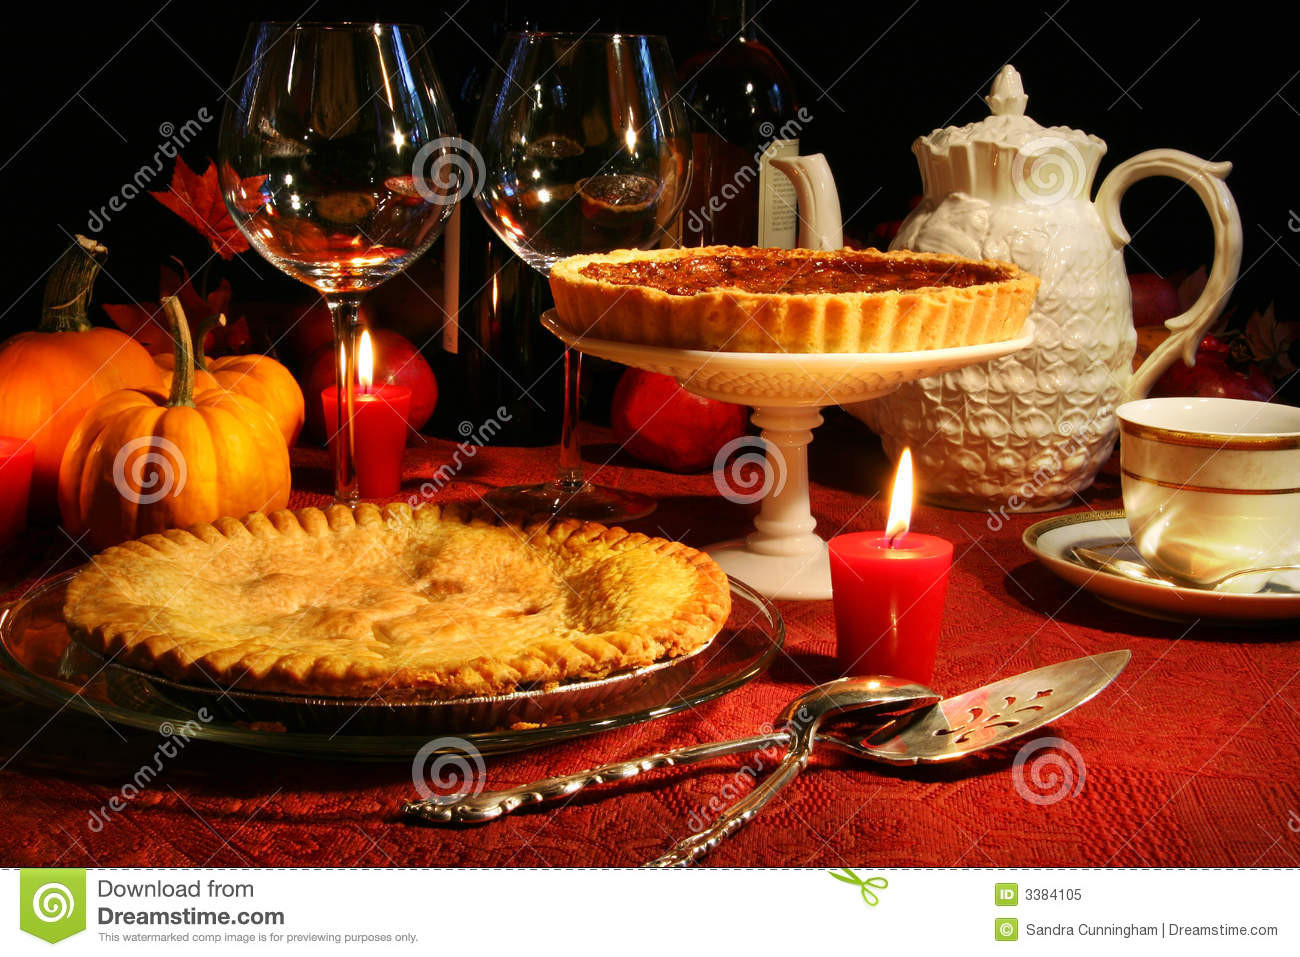 Festive Thanksgiving Desserts
 Festive Desserts Royalty Free Stock Image